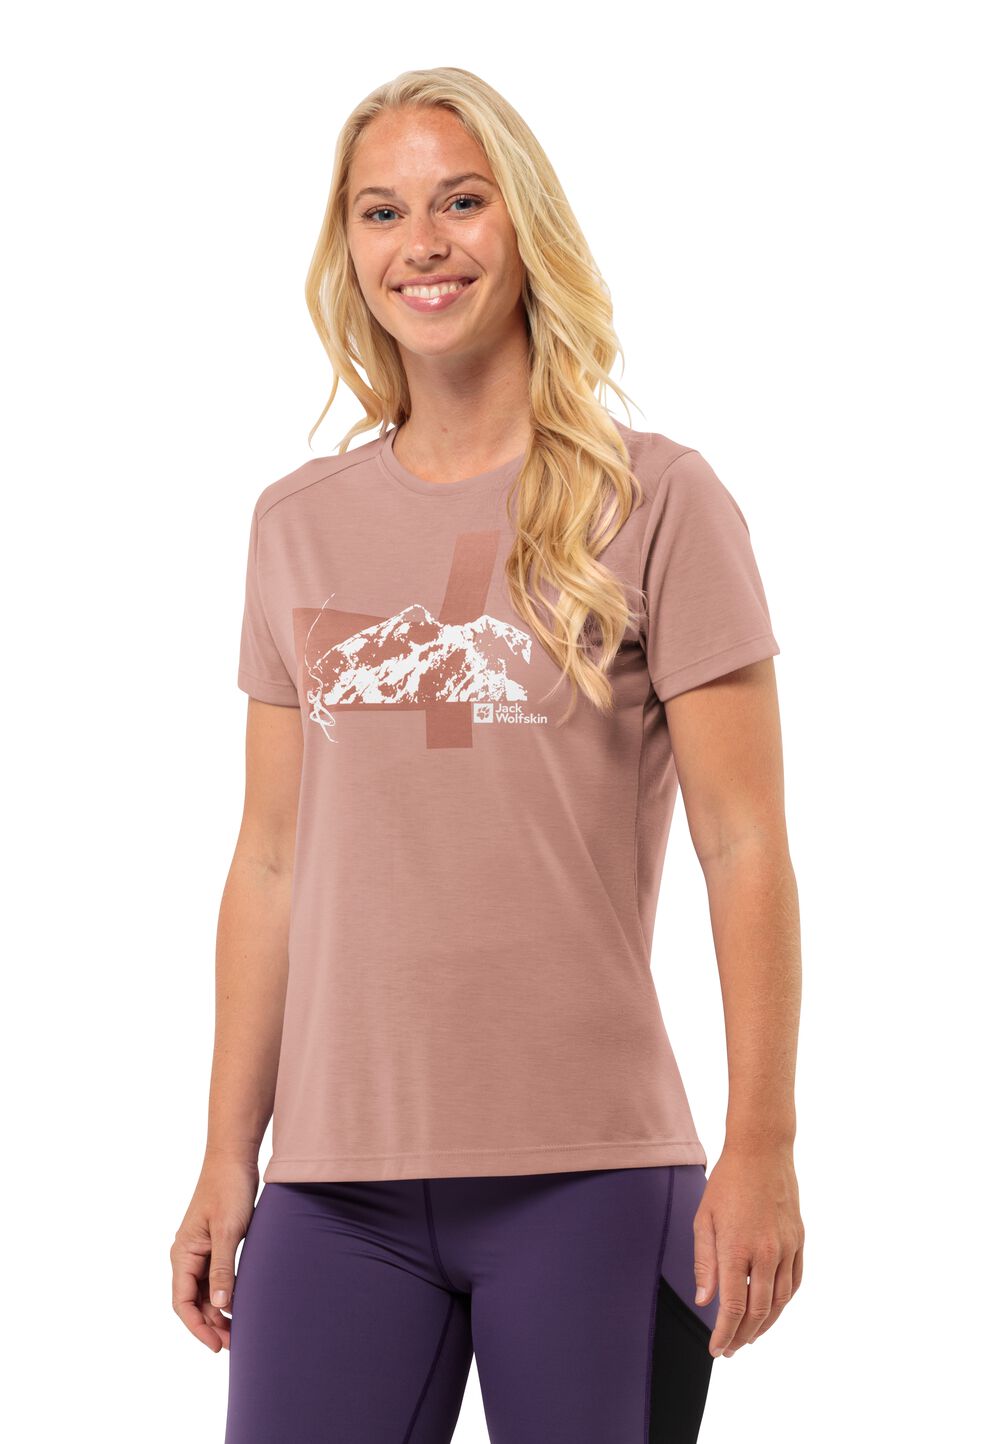 Jack Wolfskin Vonnan S S Graphic T-Shirt Women Functioneel shirt Dames XS bruin rose dawn